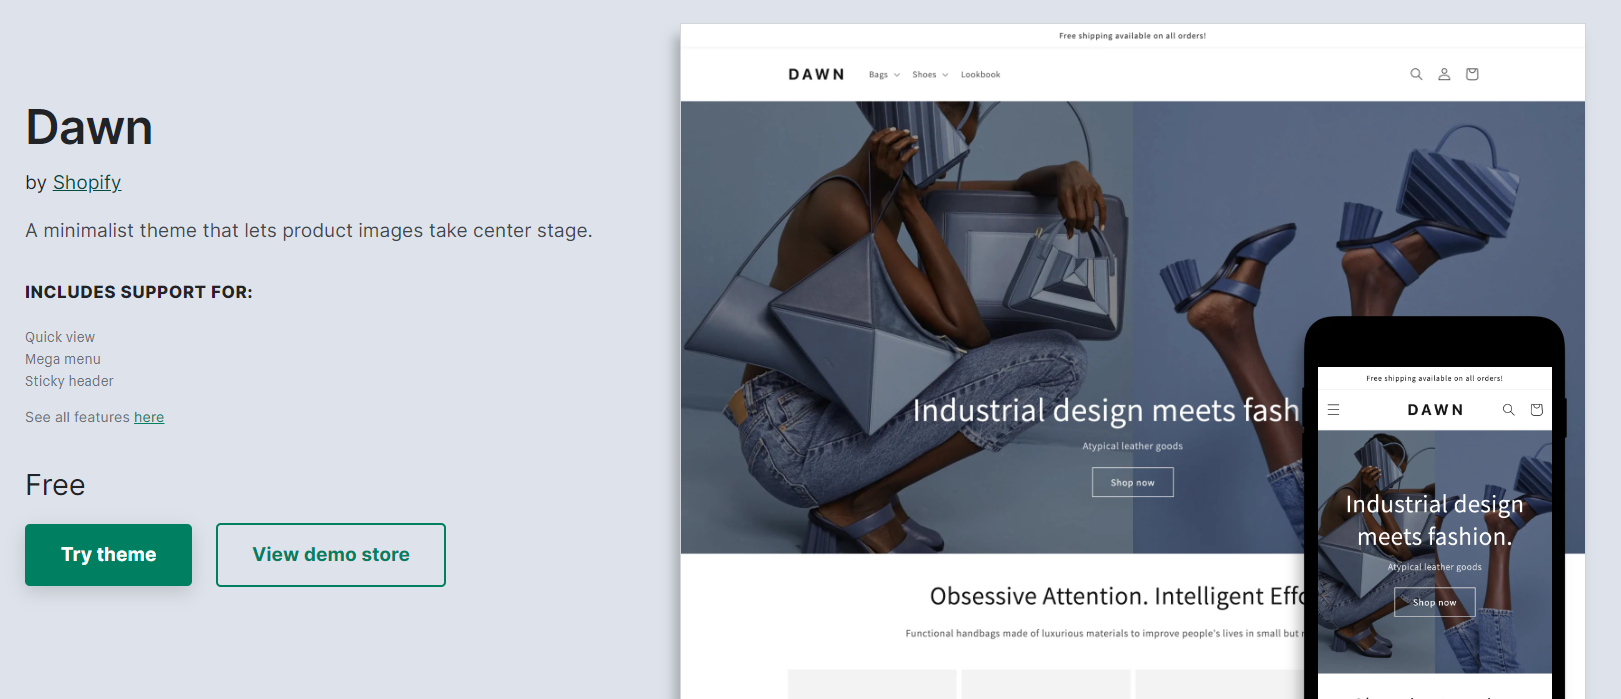 Shopify website design tips: Dawn